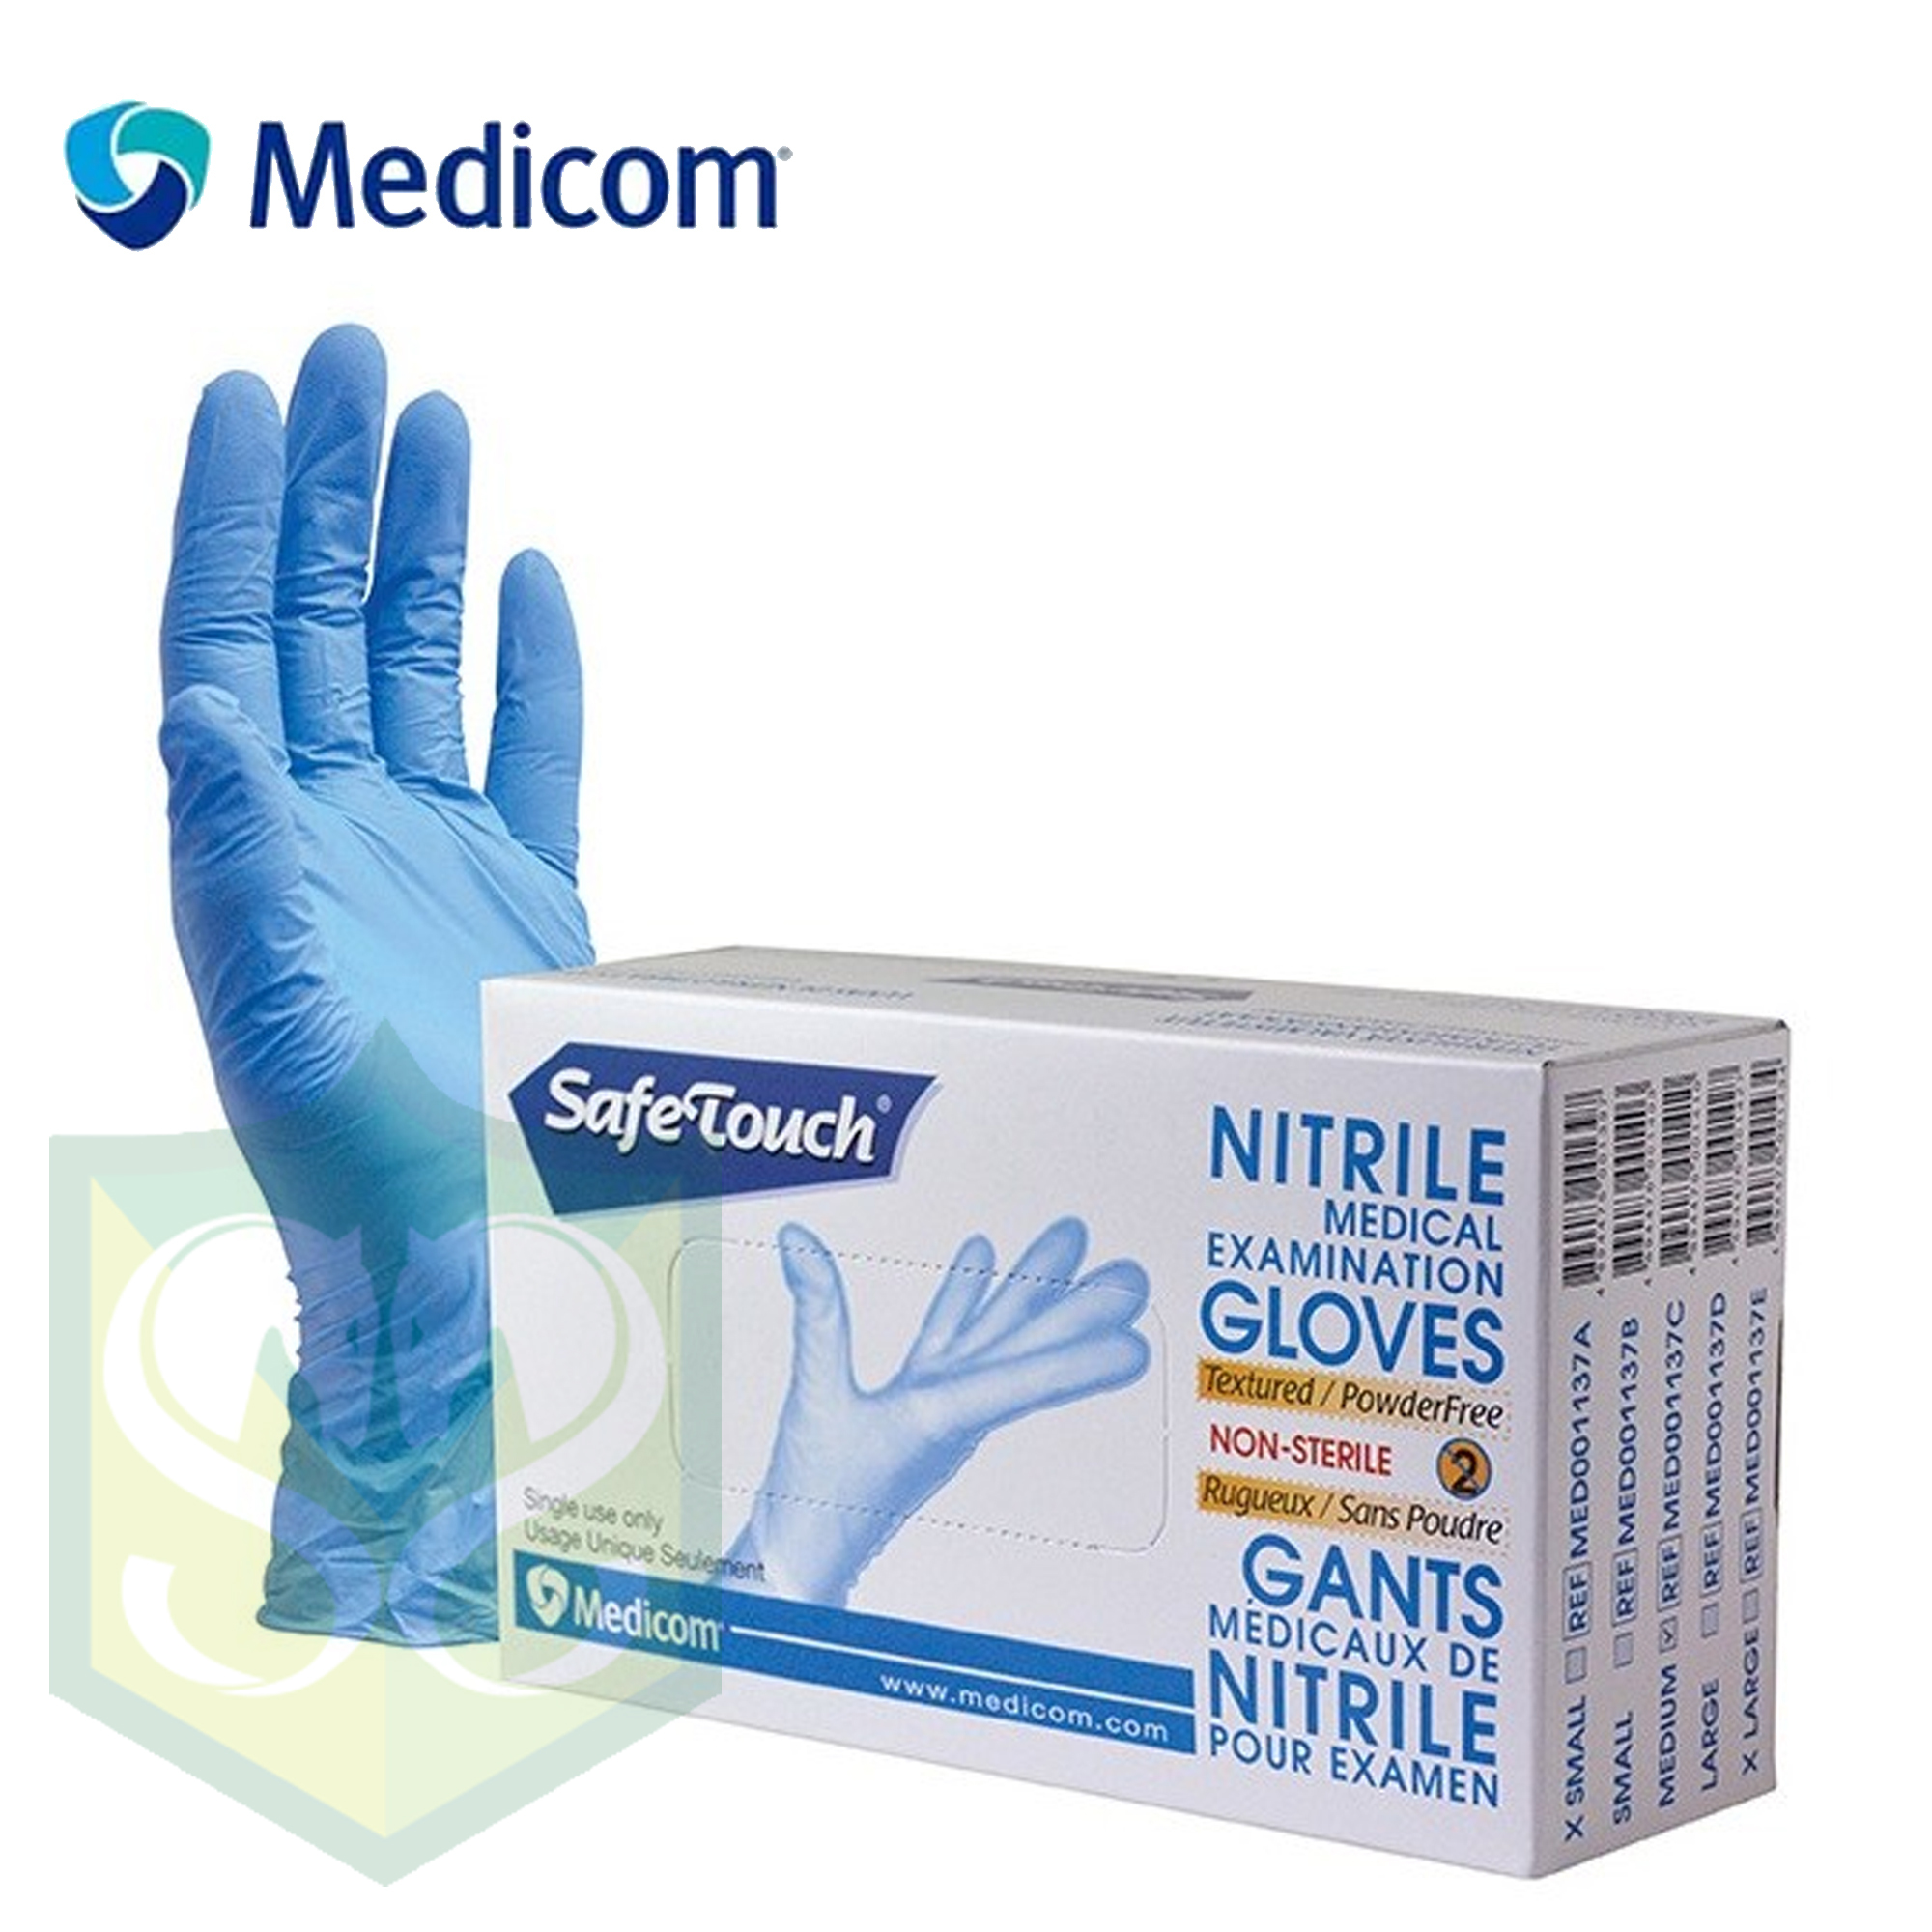 Medicom Second Skin Latex Gloves Powderfree M 100/Box - HSHK